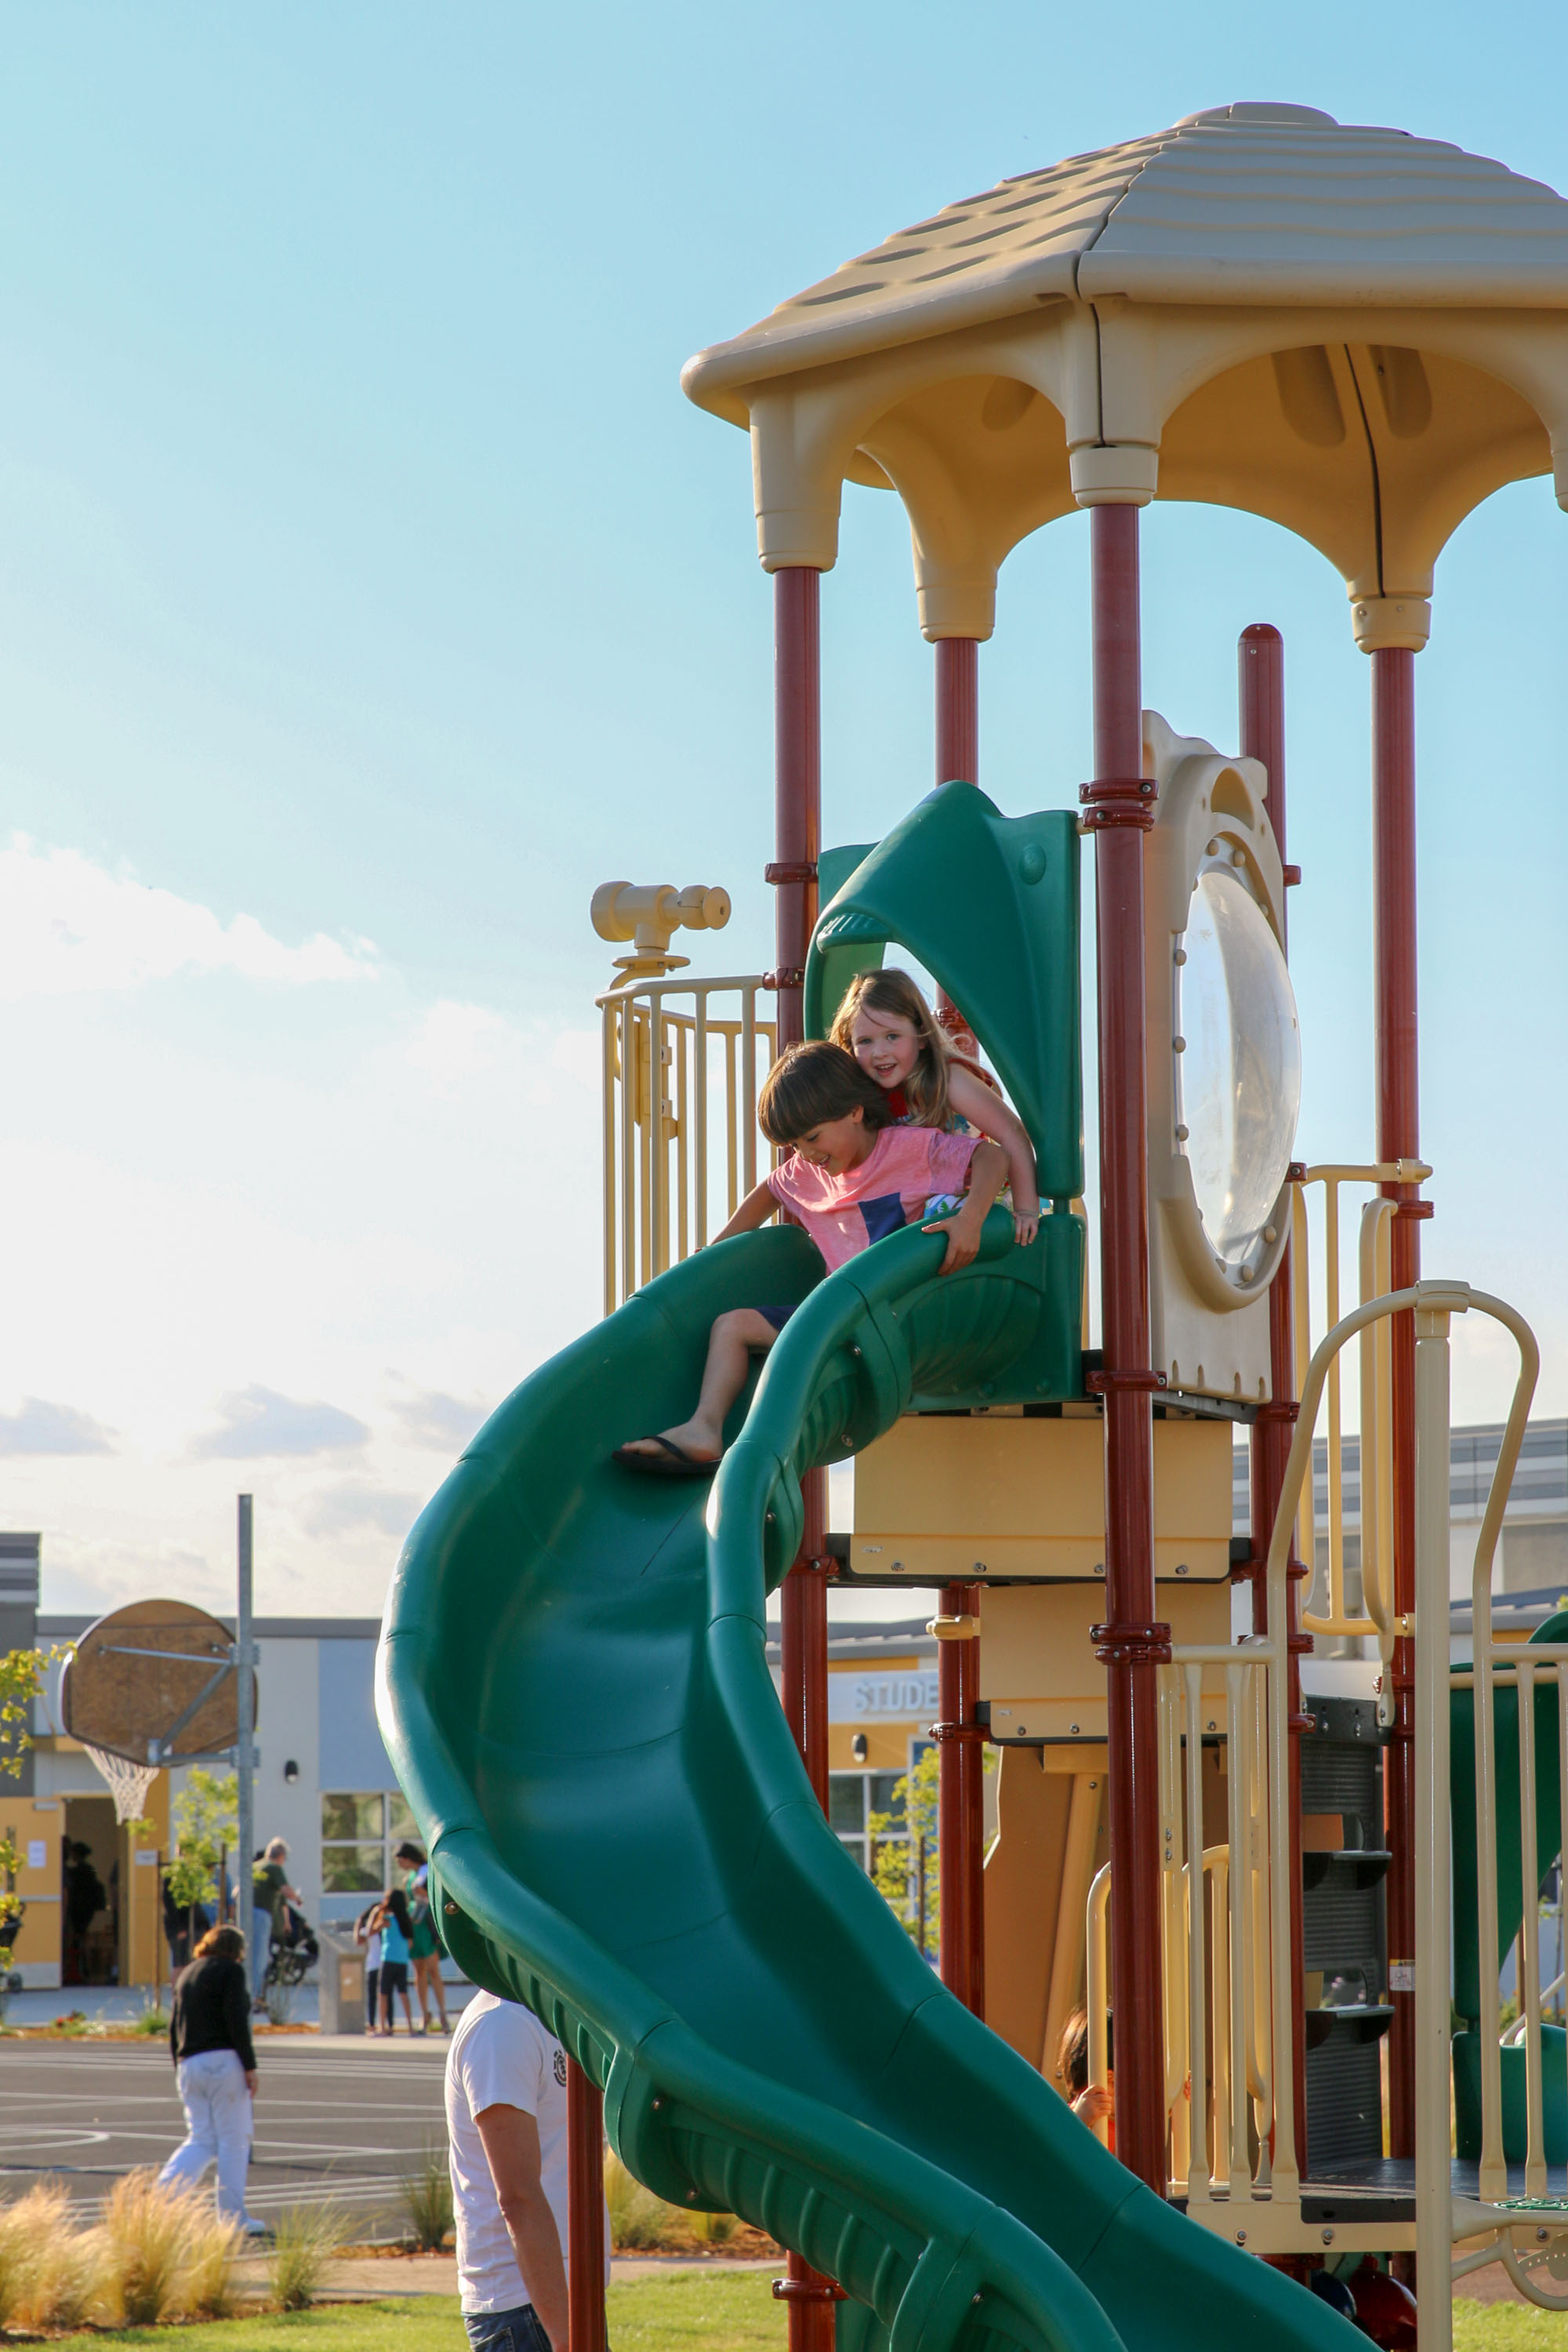 Spring Lake Elementary School Playground Slide